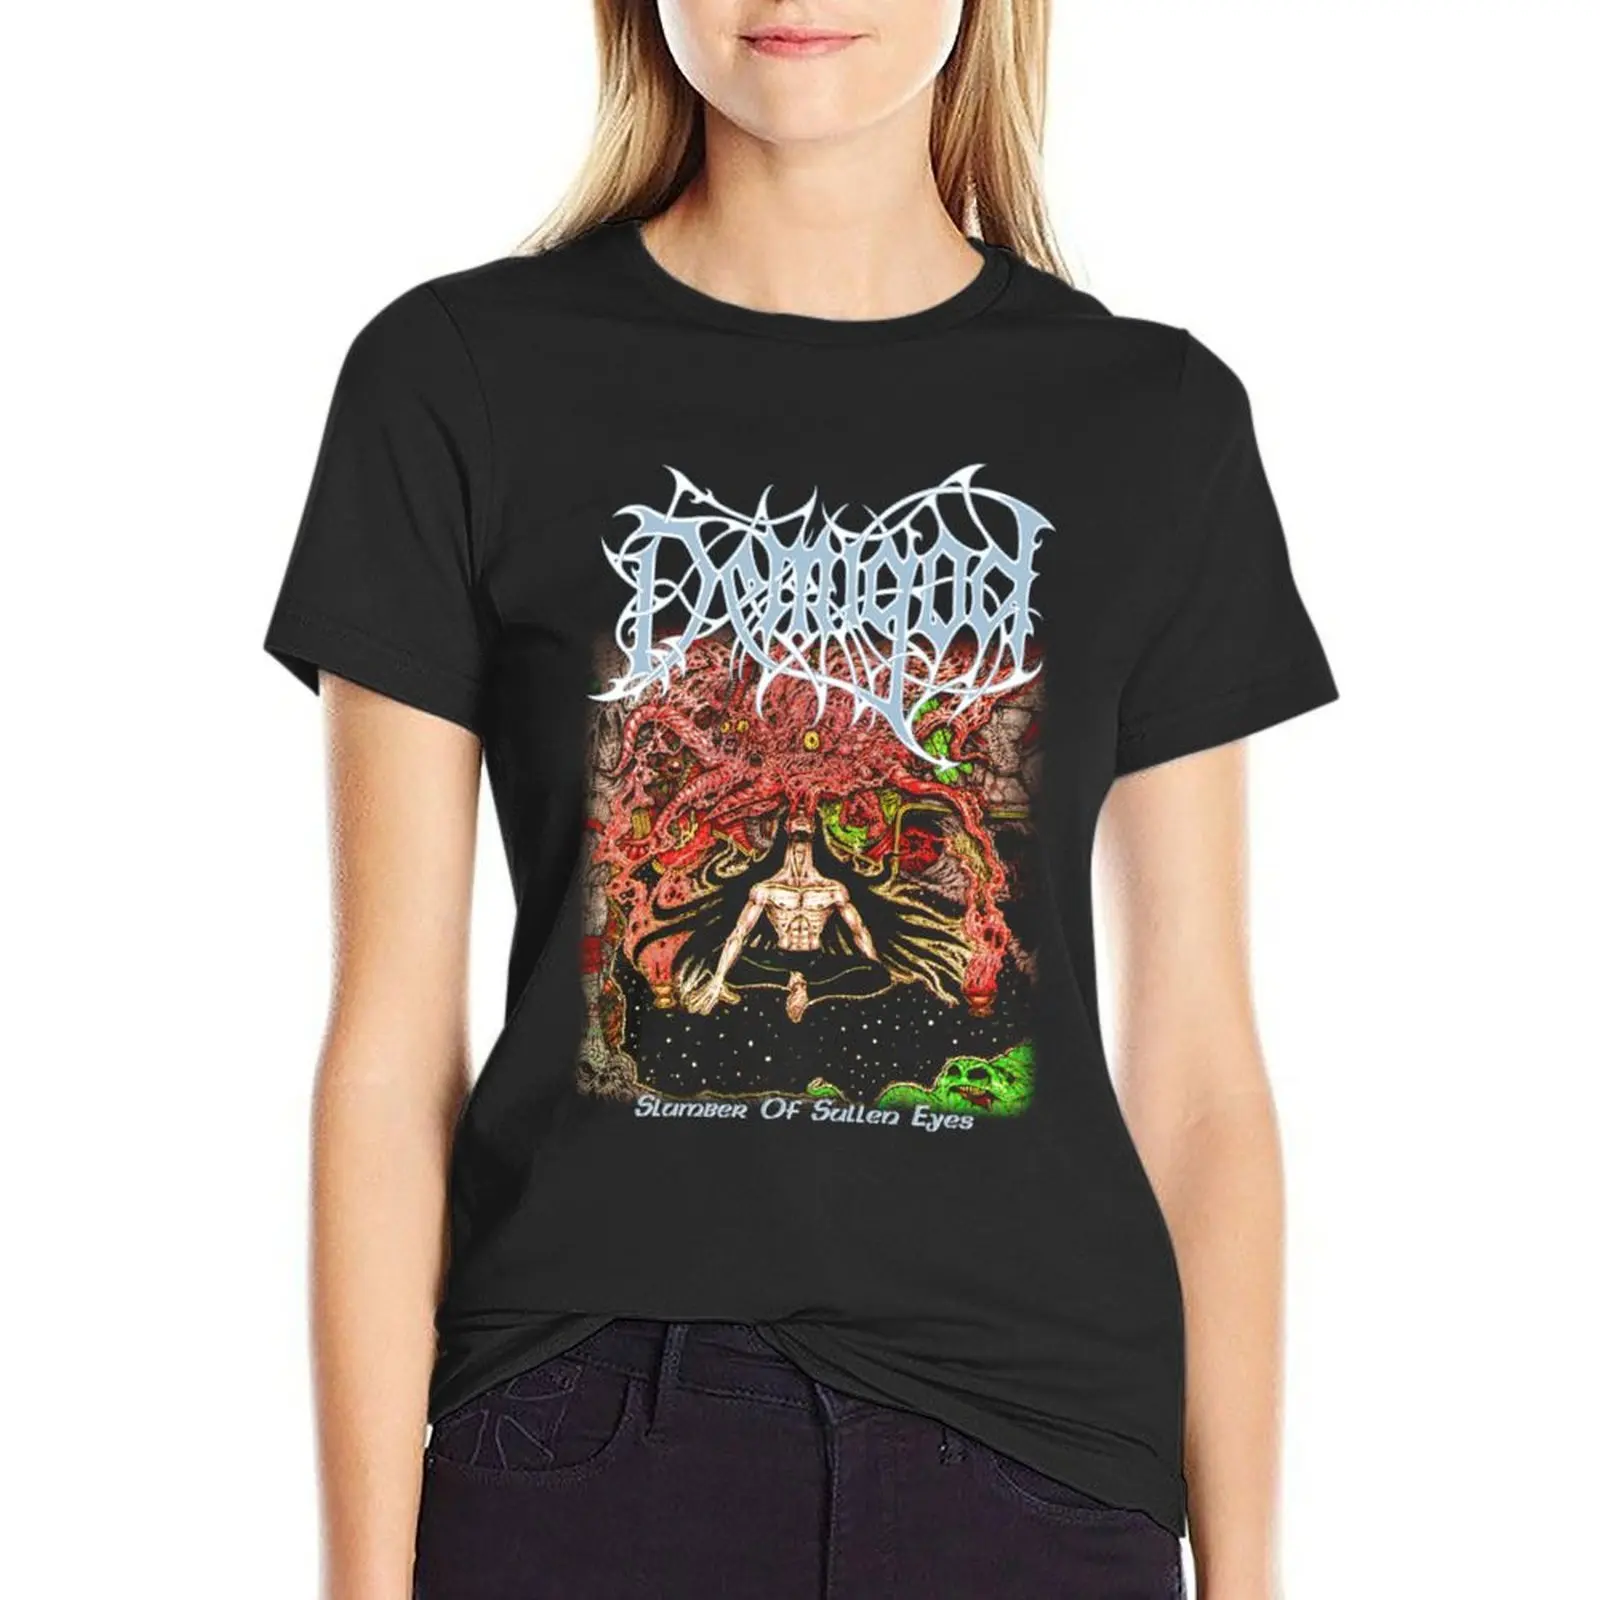 

Slumber of Sullen Eyes by Demigod - Classic Old School Death Metal T-Shirt female Blouse plain black t-shirts for Women